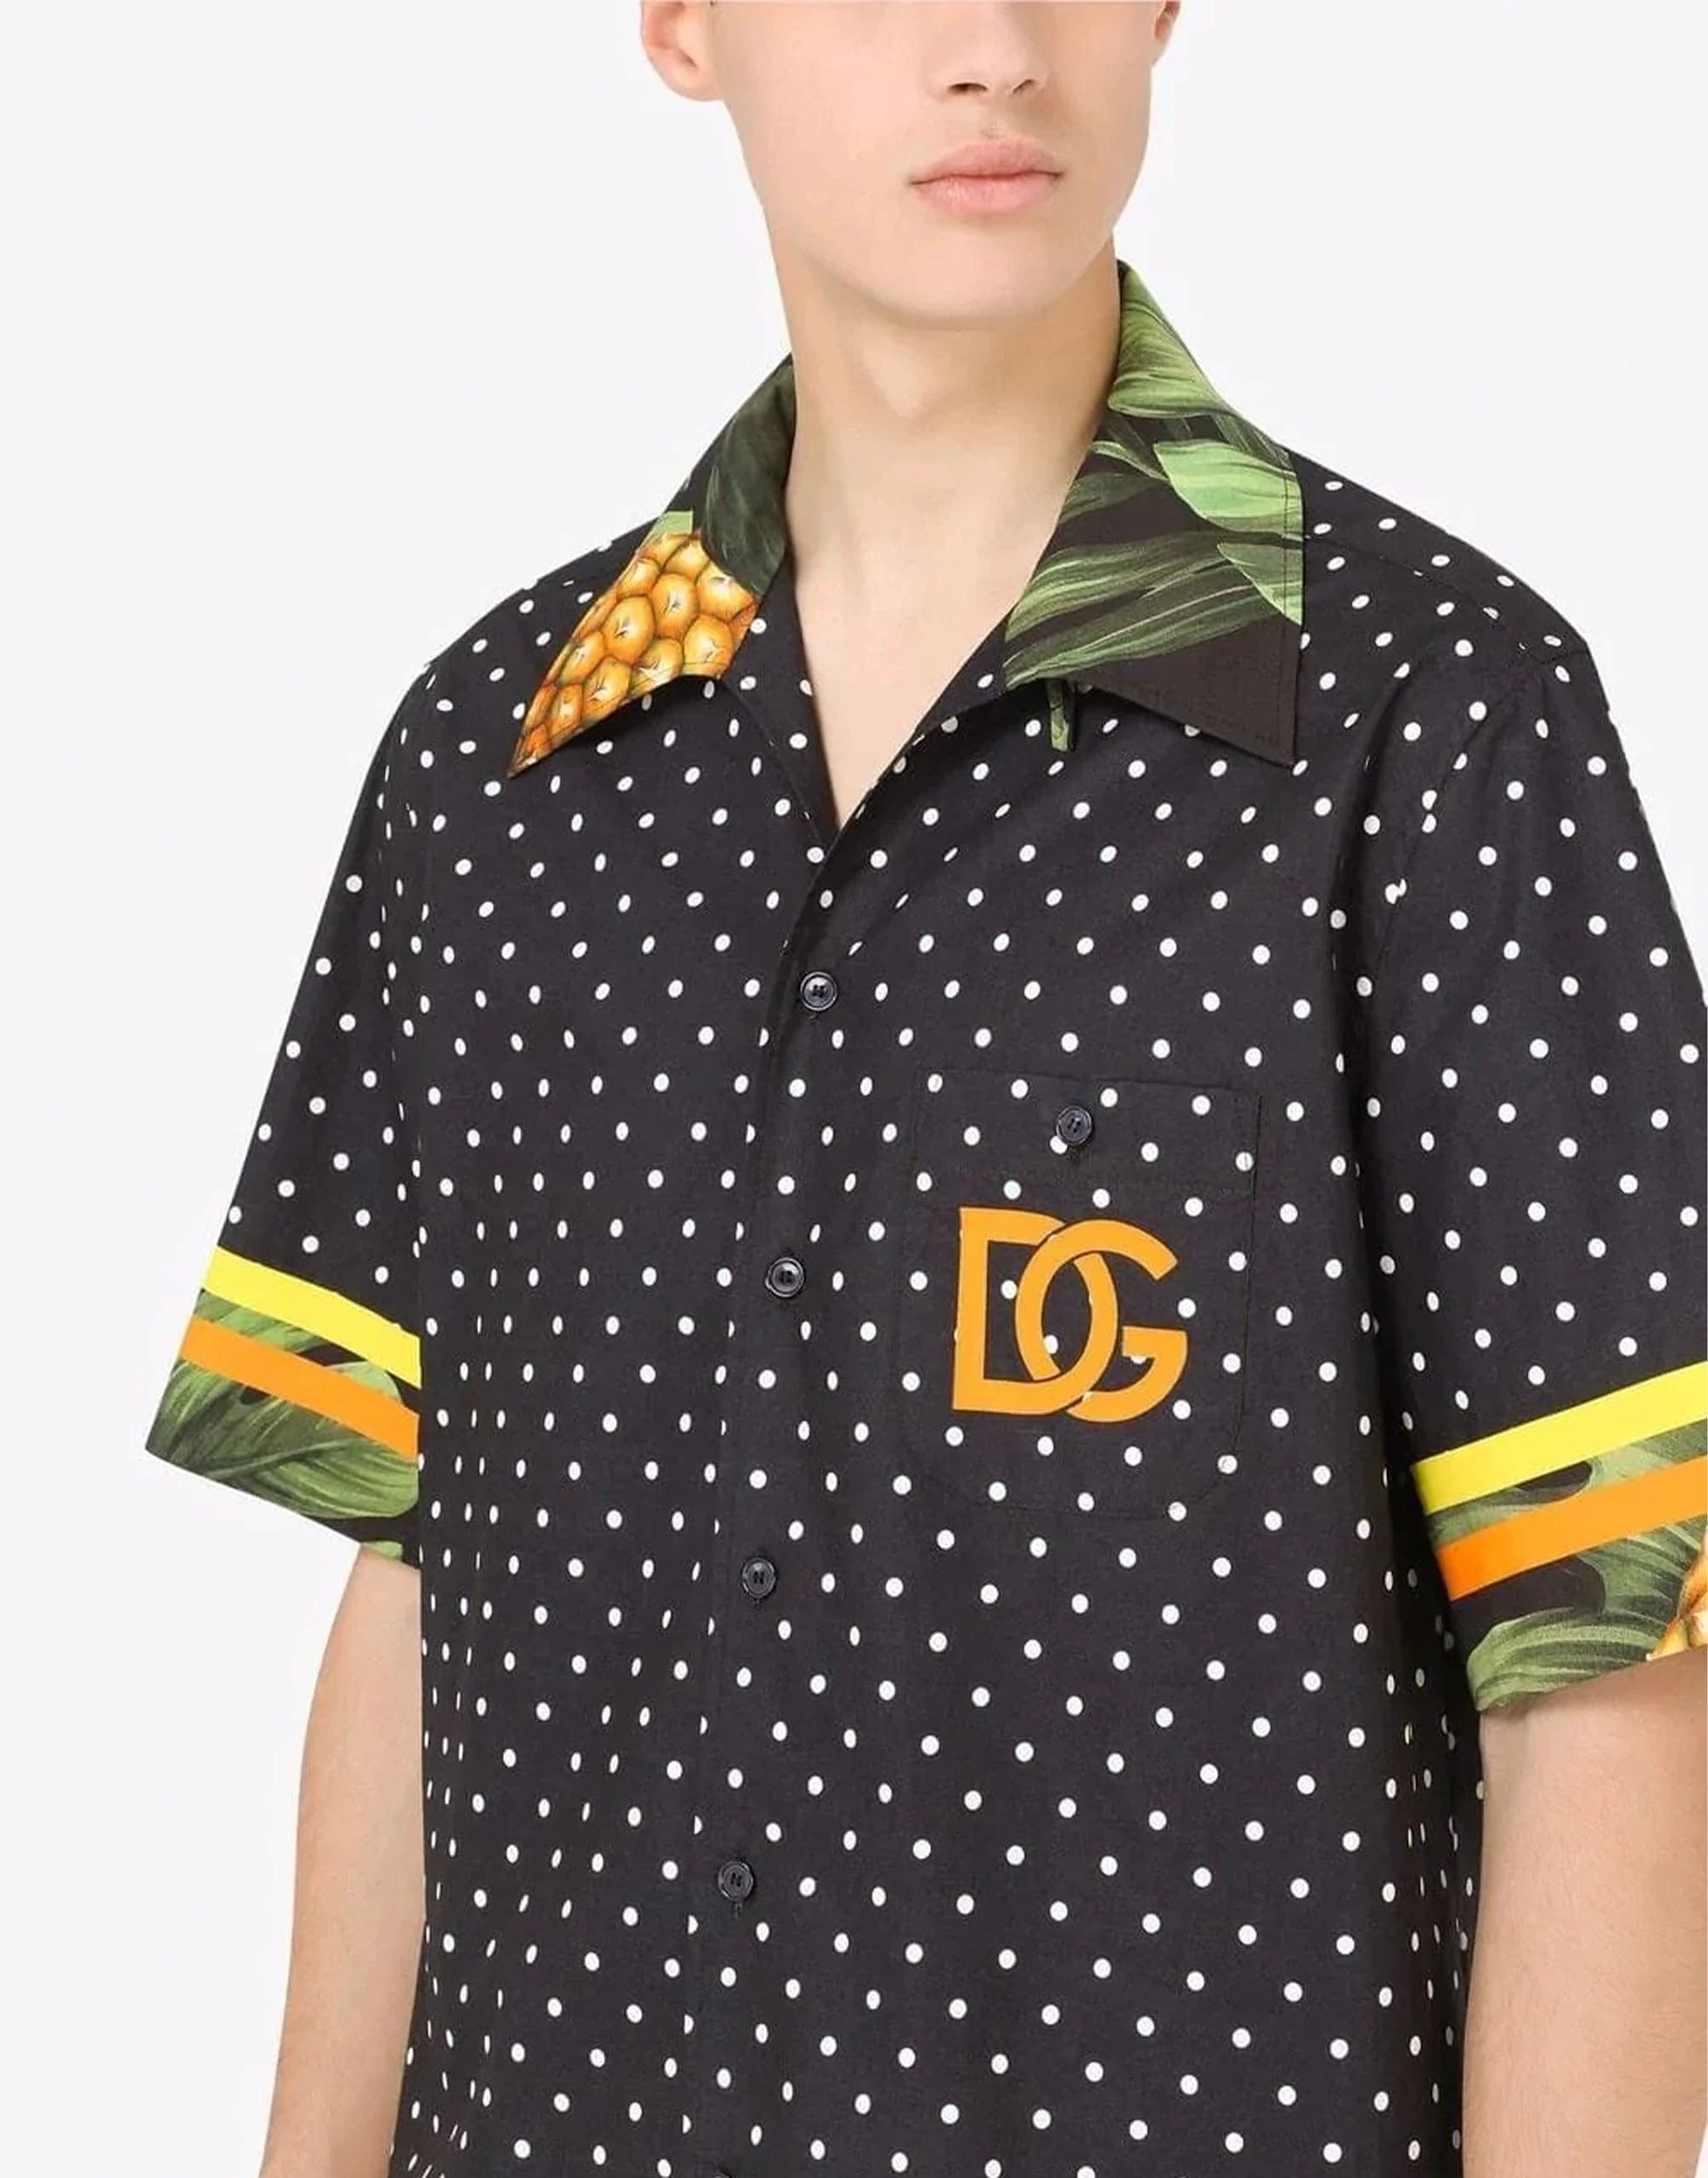 Polka dot print shirt